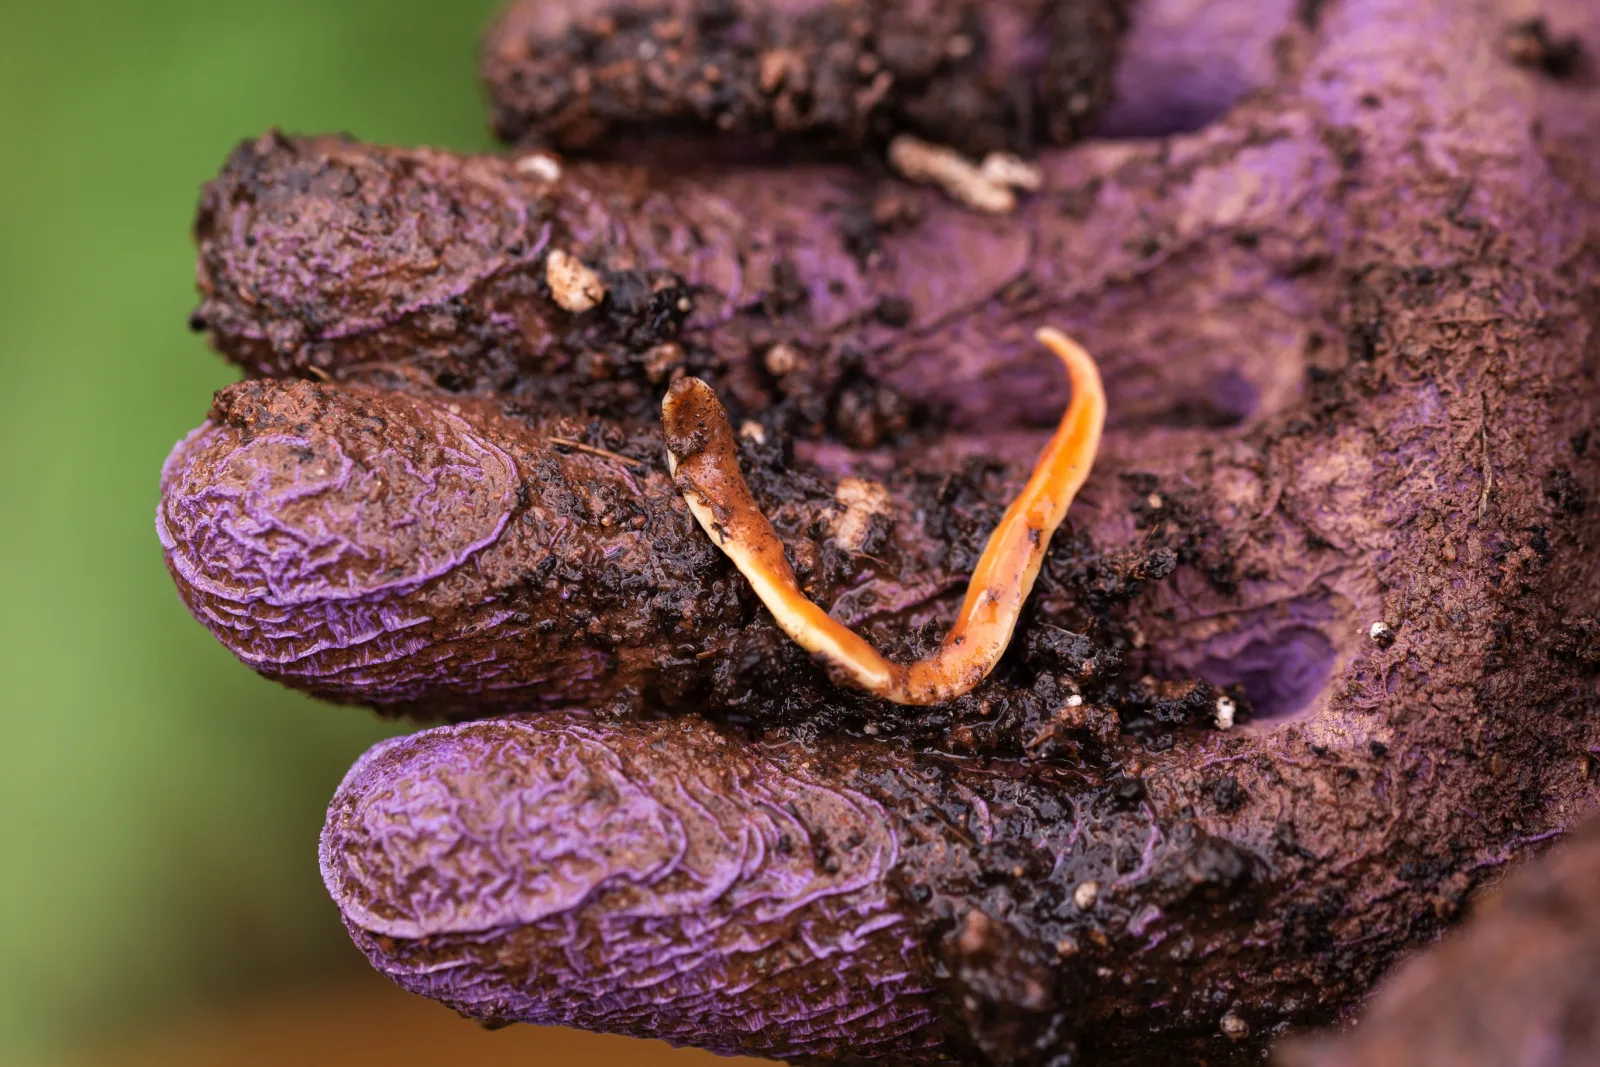 Australoplana sanguinea Australian predatory land flatworm in gardeners hand.